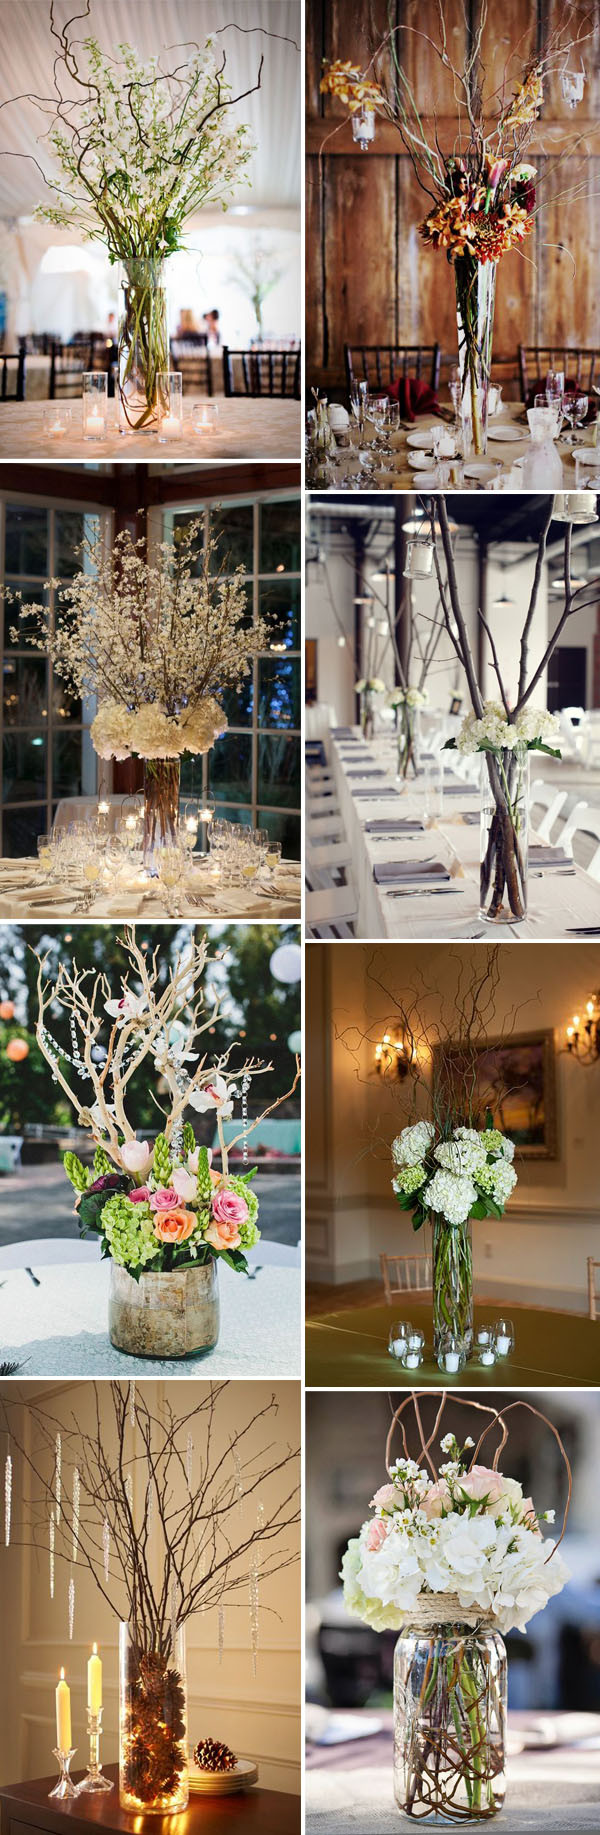 DIY Wedding Centerpieces With Branches
 28 Creative & Bud friendly DIY Wedding Decoration Ideas